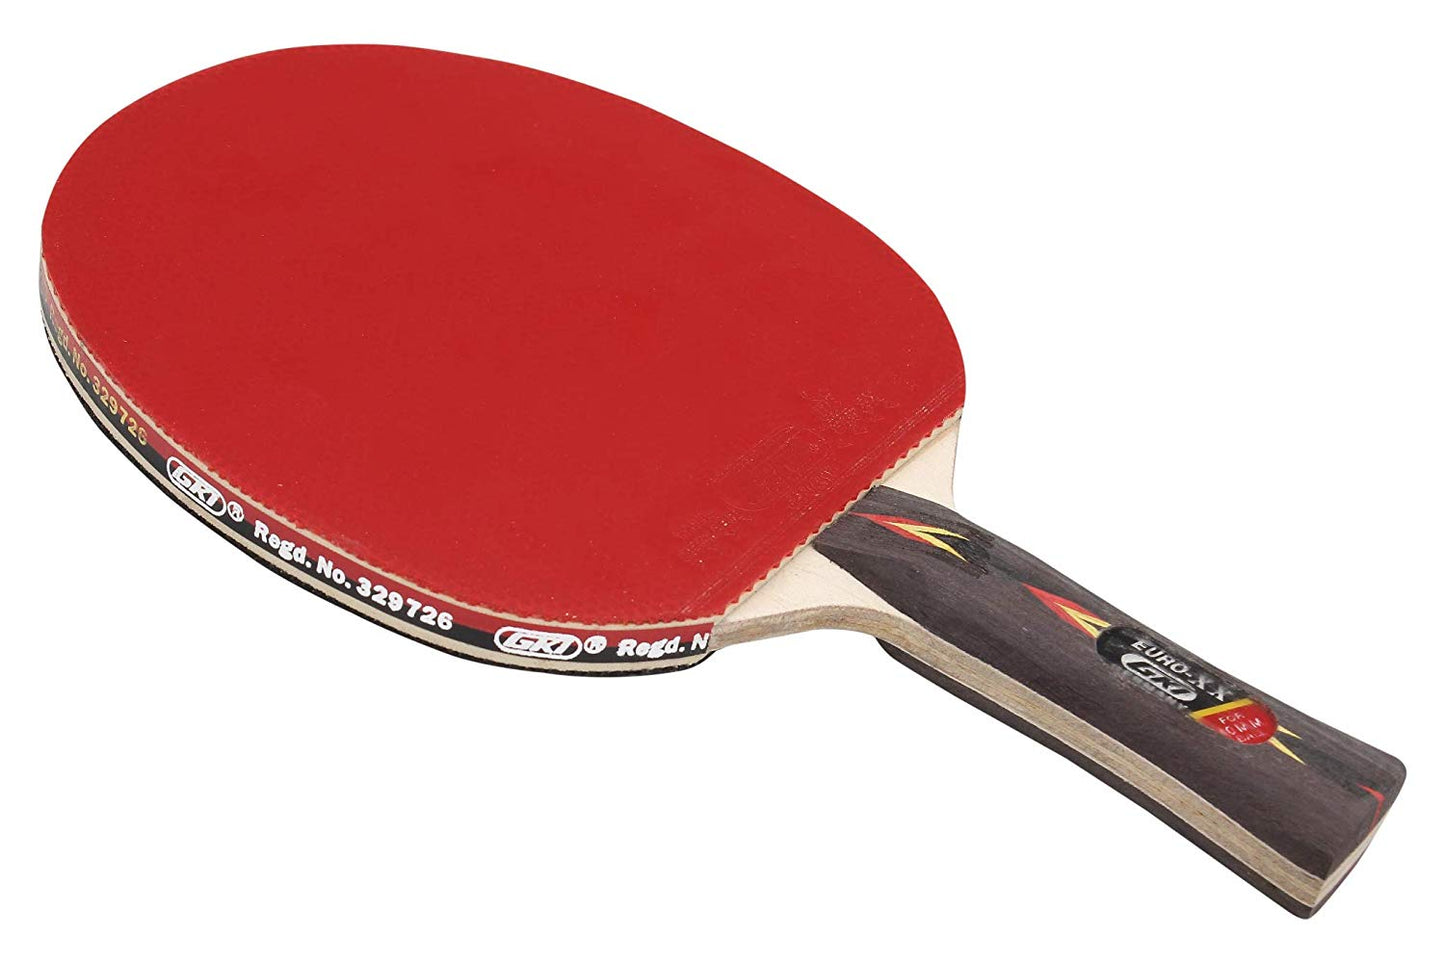 GKI Euro XX Table Tennis Racket - Best Price online Prokicksports.com